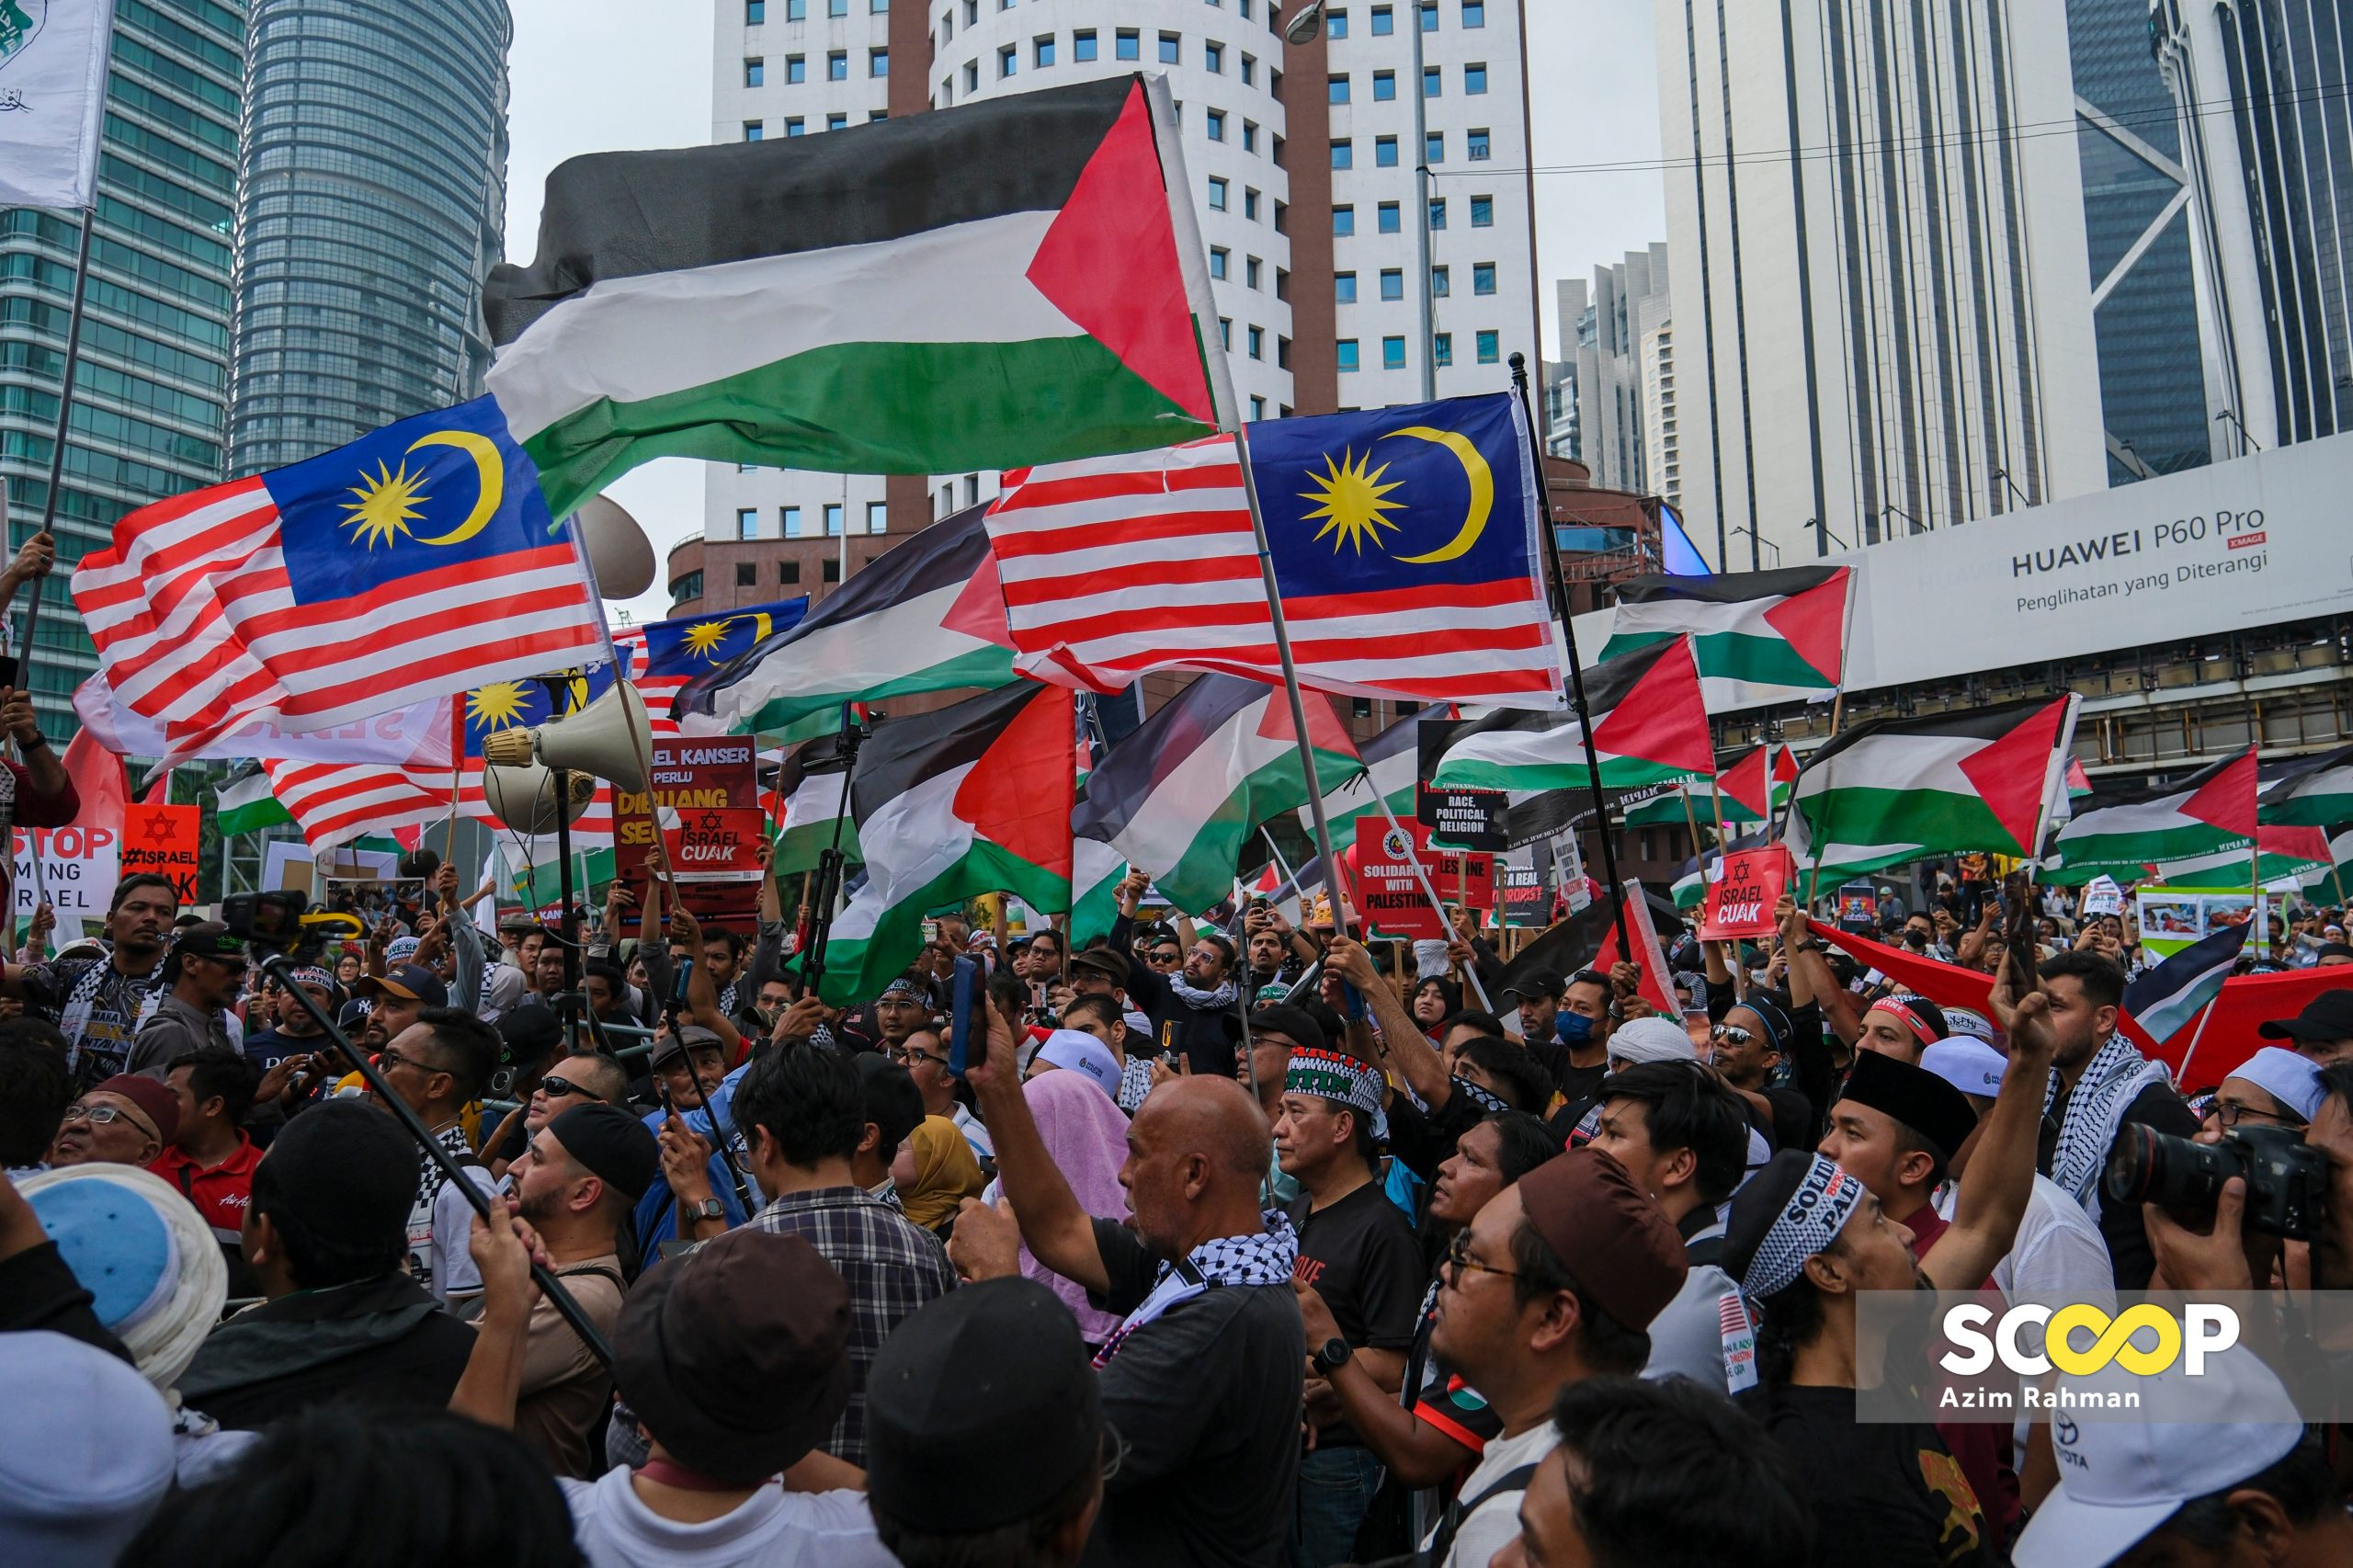 NGOs will hold Freedom for Palestine rally in Dataran Merdeka on Sunday